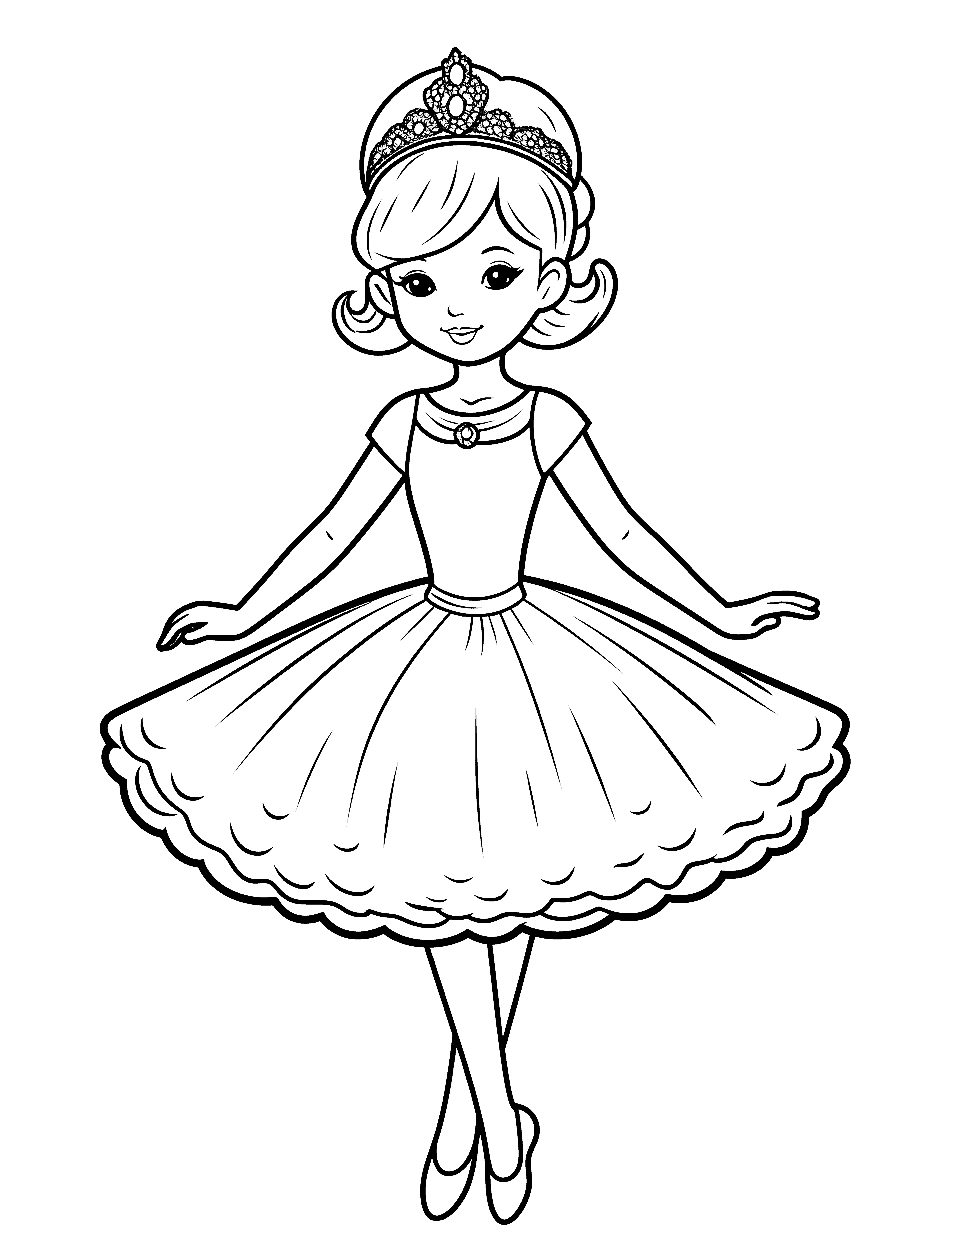 Cinderella-Inspired Ballerina Coloring Page - A ballerina dressed like Cinderella dancing.